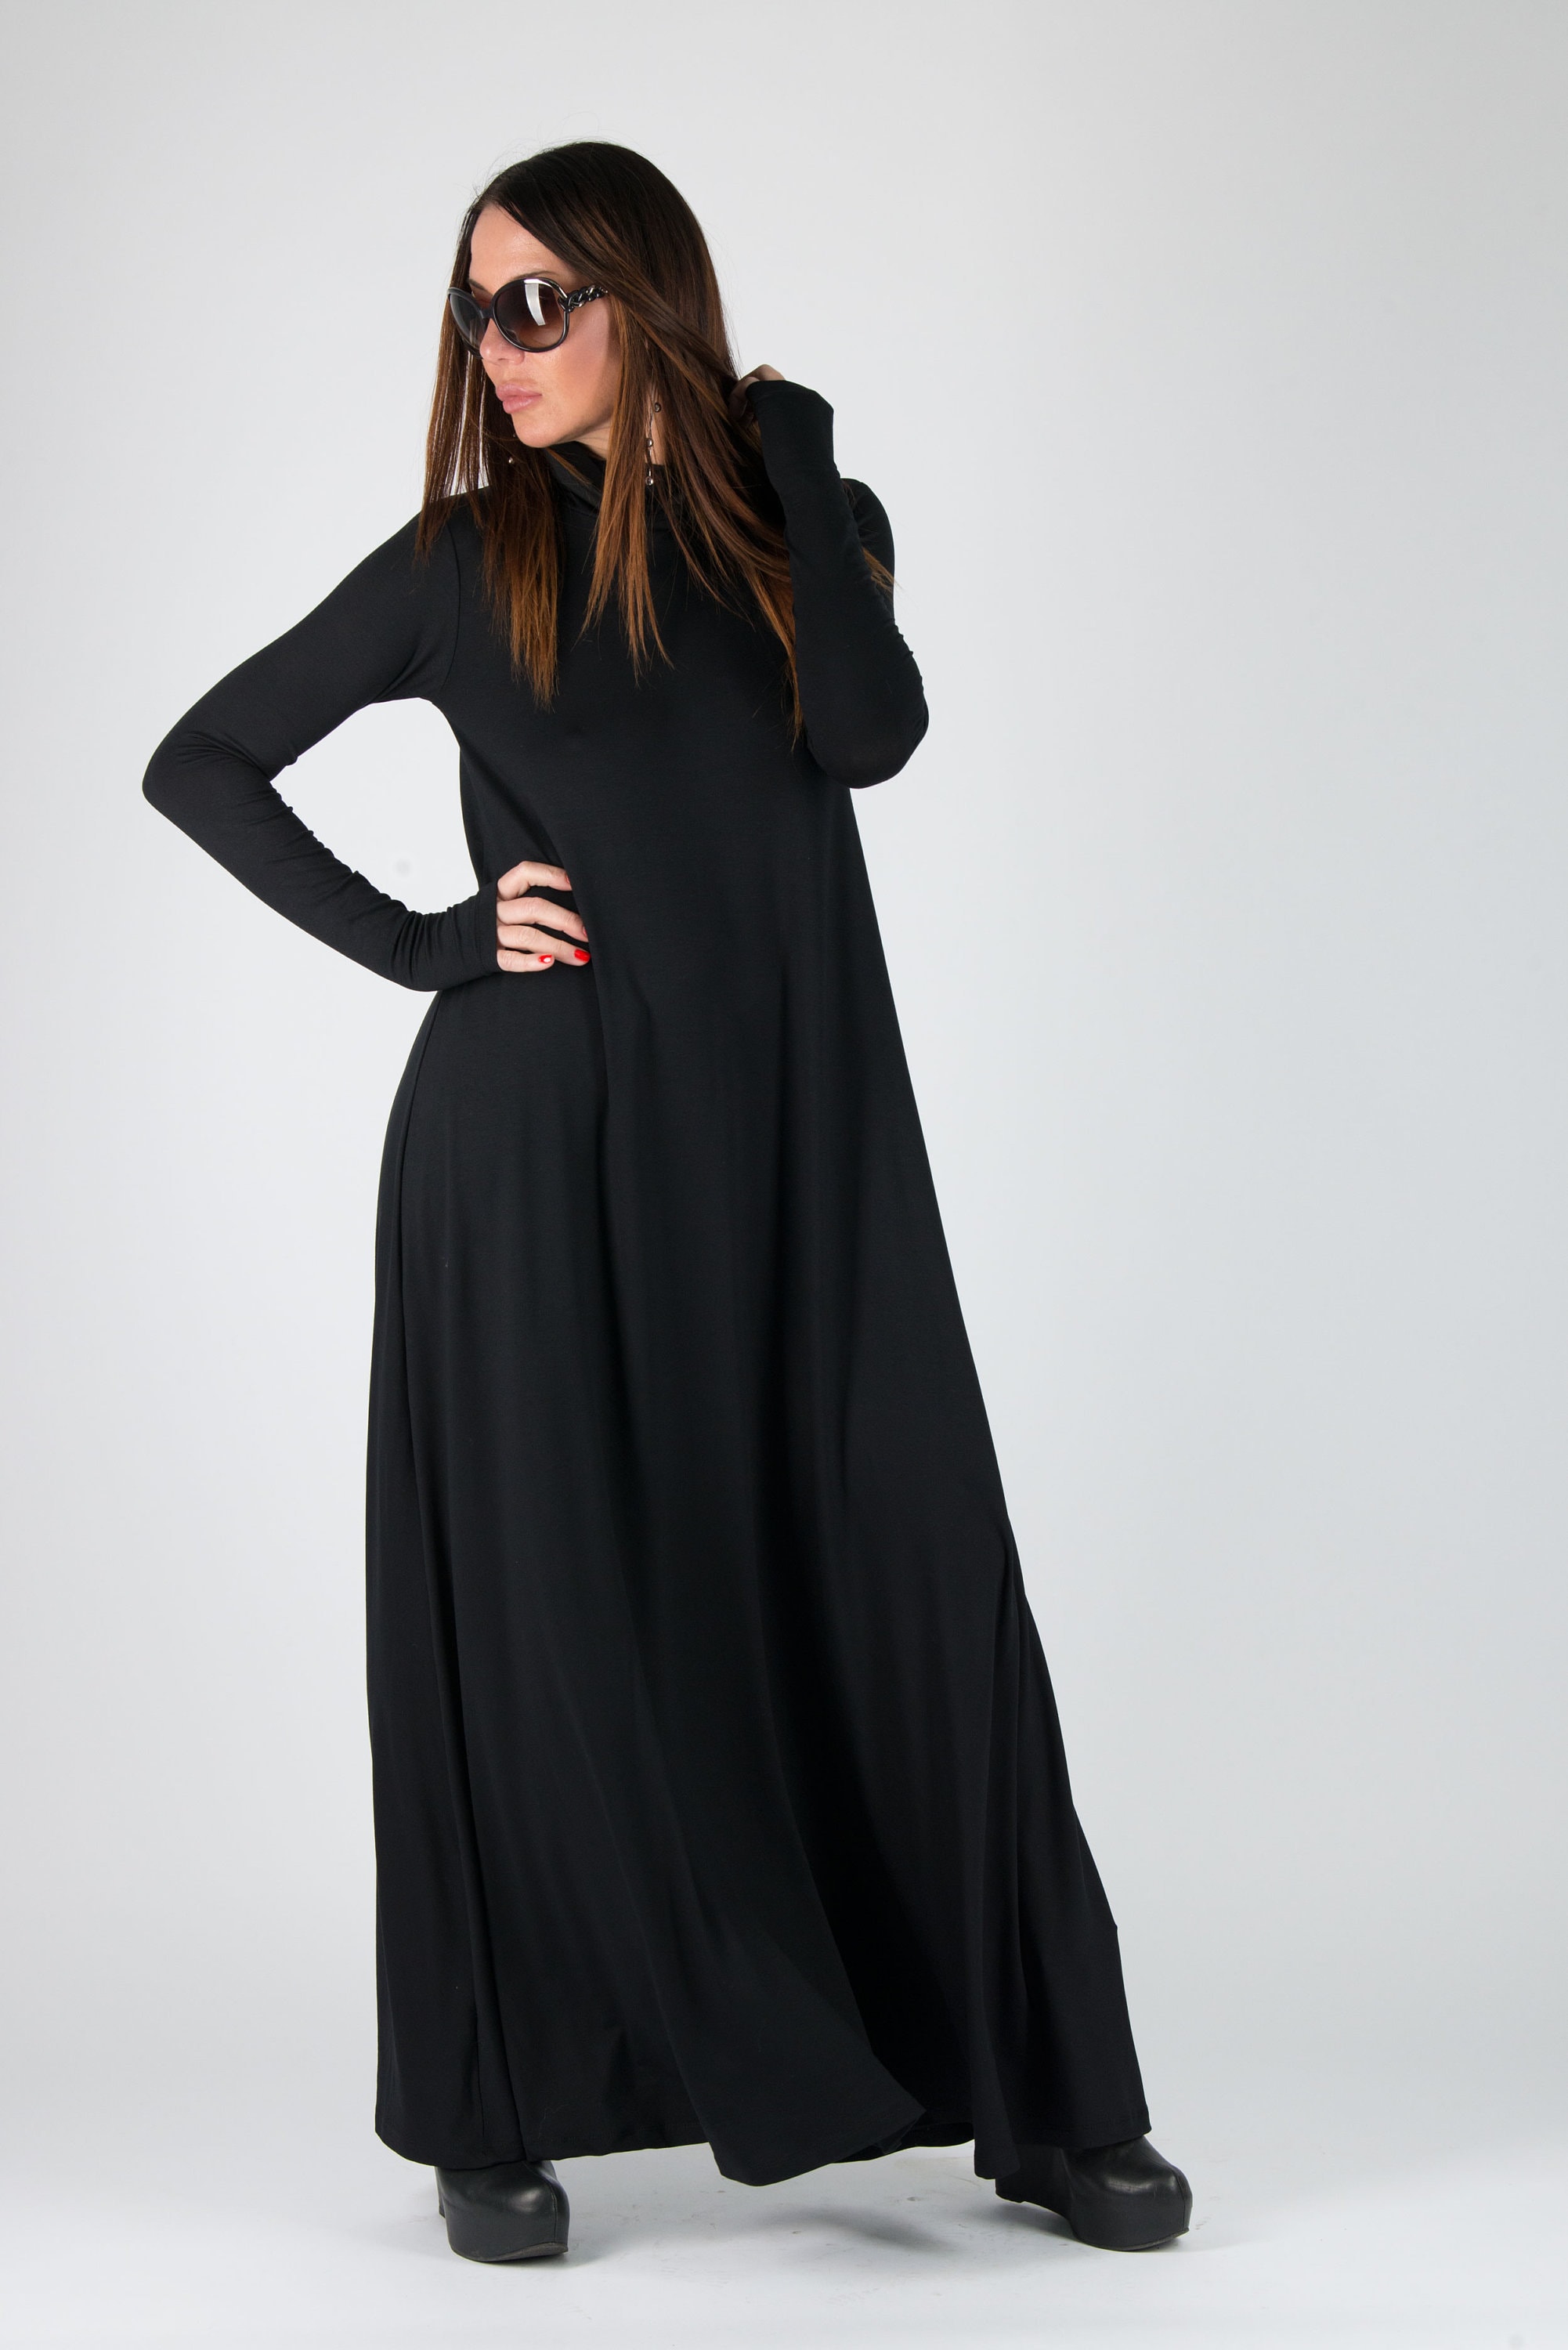 Black Dress Turtleneck Dress Winter Dress Maxi Dress Plus | Etsy